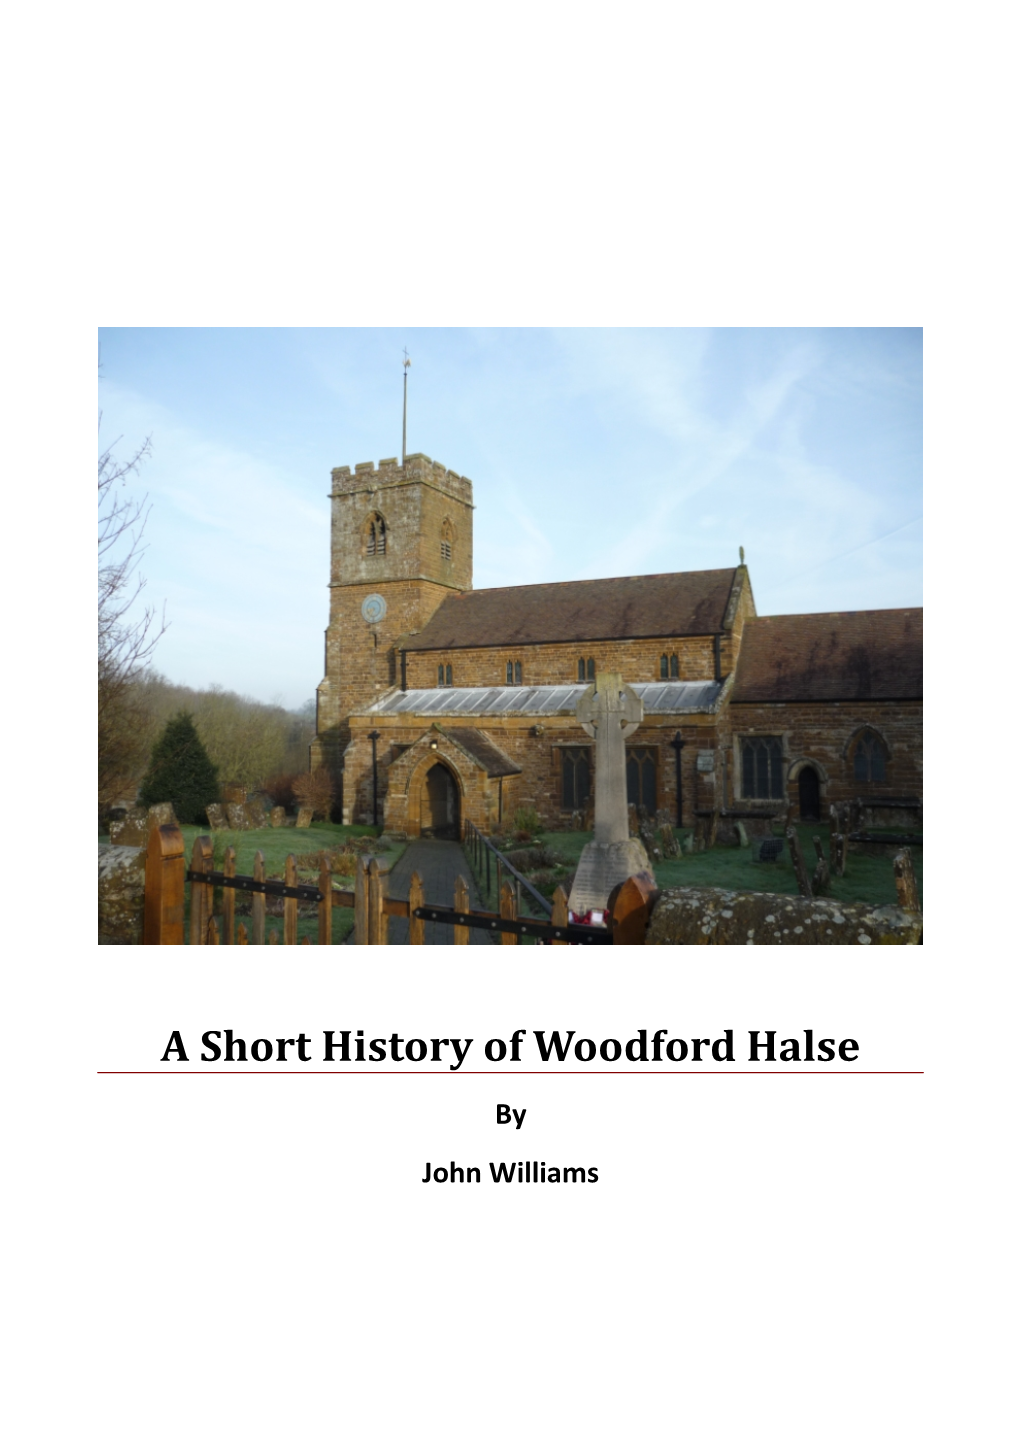 A Short History of Woodford Halse